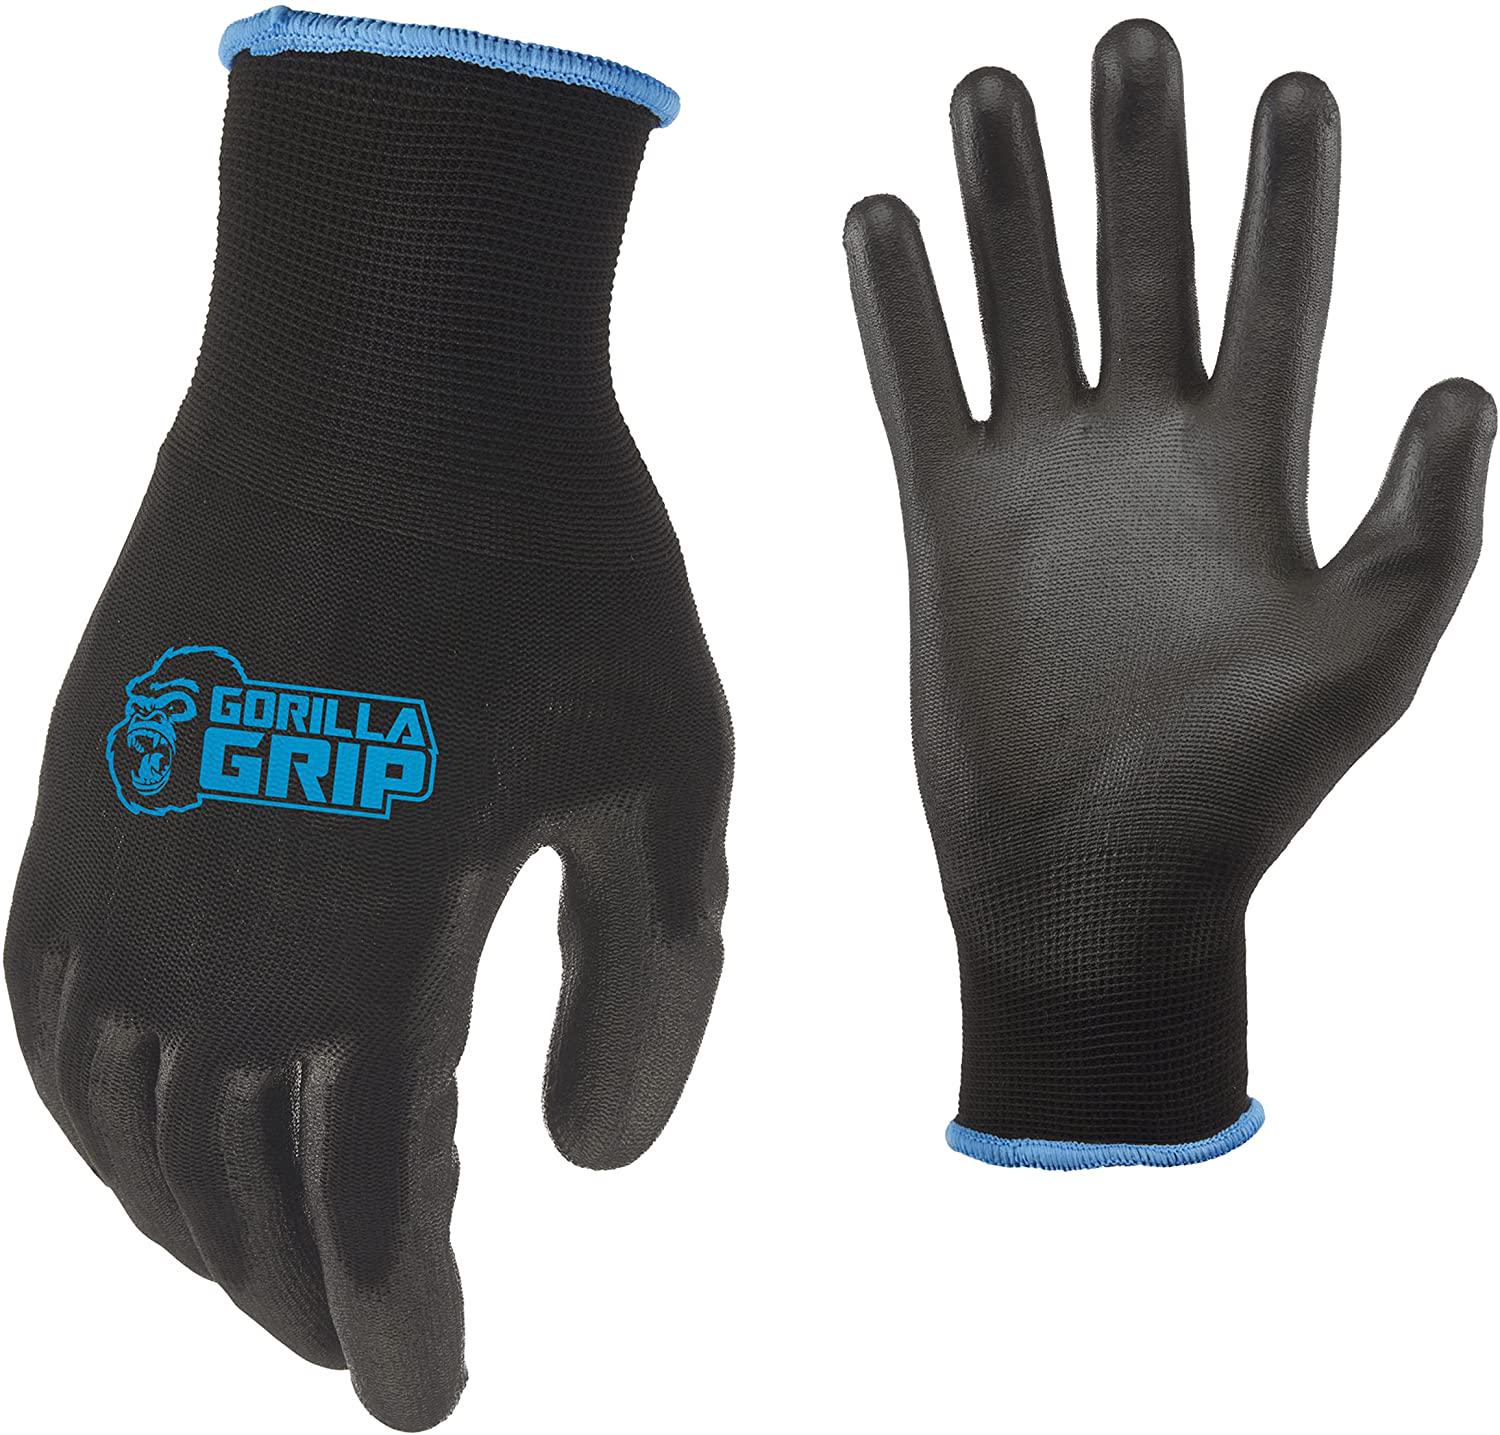 Gorilla Grip, Gorilla Grip Slip Resistant All Purpose Work Gloves | Size: Large | Single Pair of Gloves